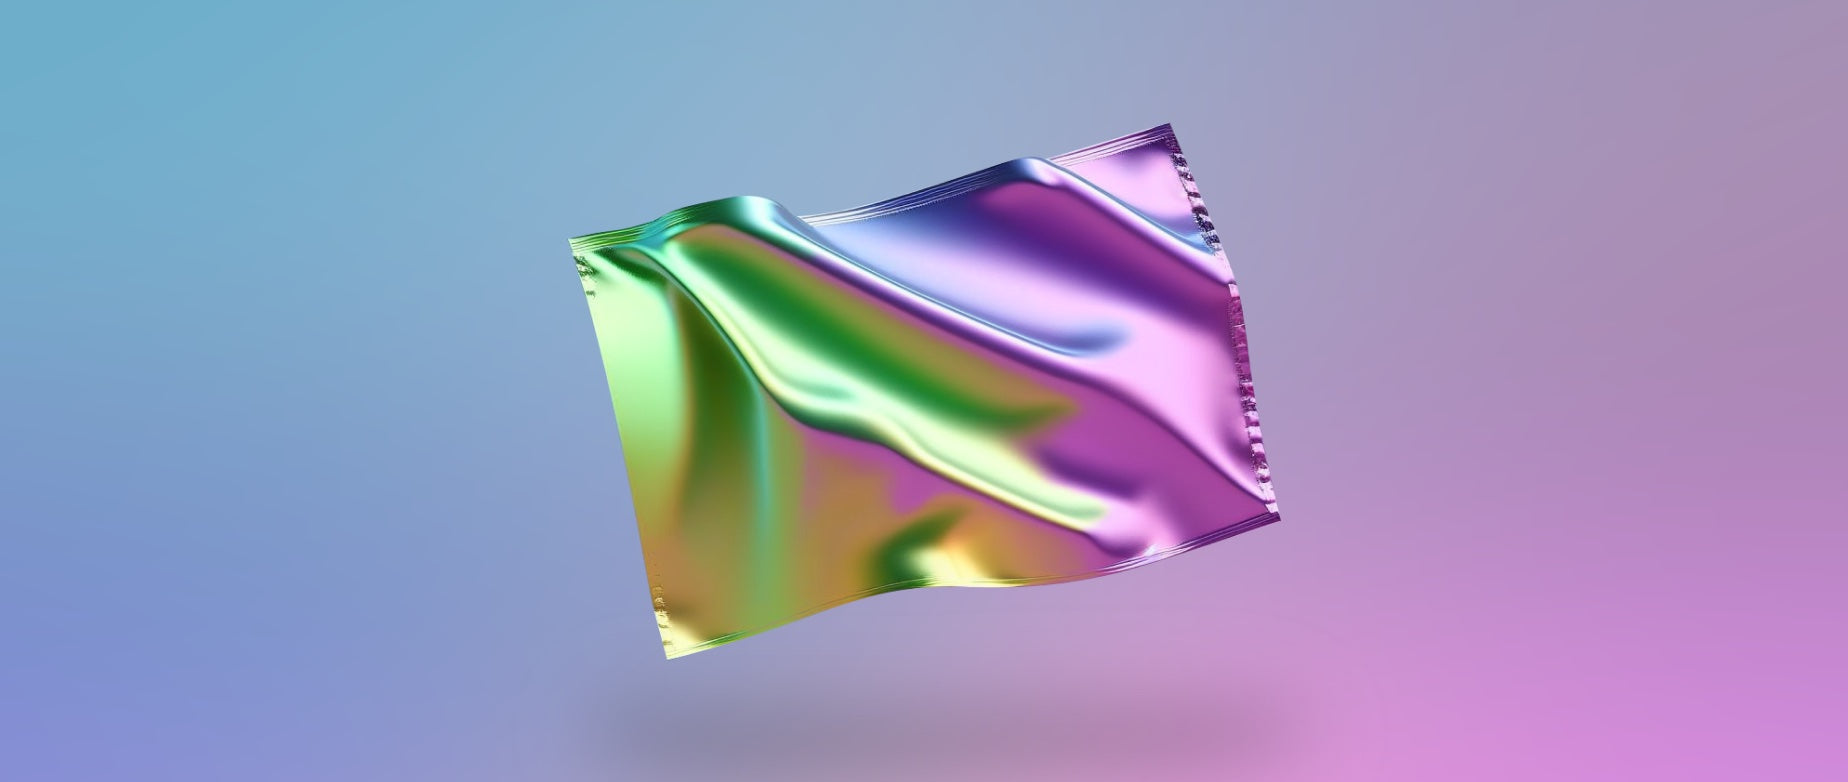 AI multi-colored flag on a colorful background